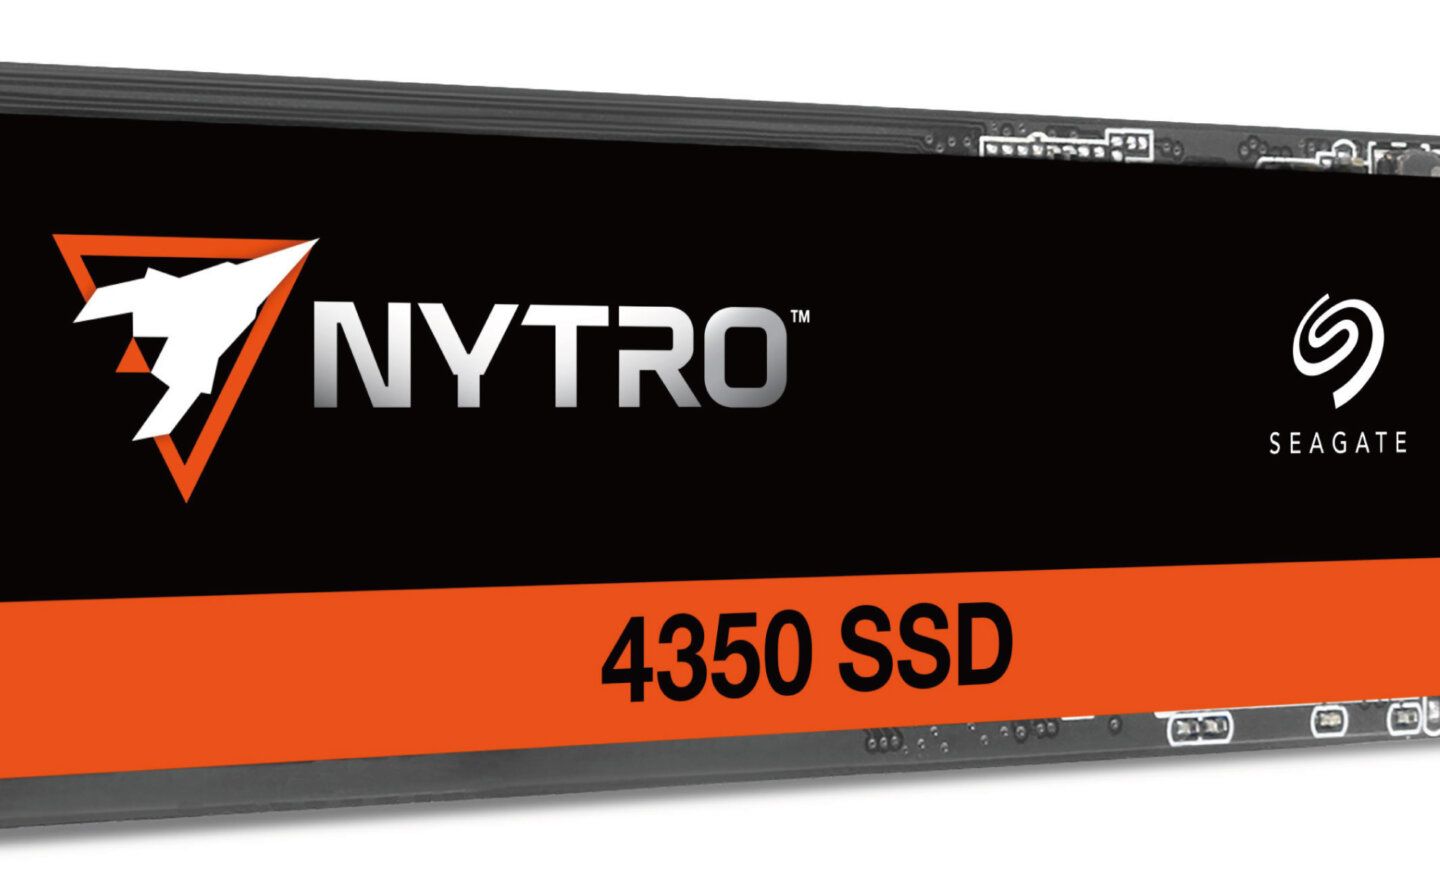 Seagate 攜手 Phison 設計 Nytro 4350 NVMe SSD，提供穩定效能及低耗電量